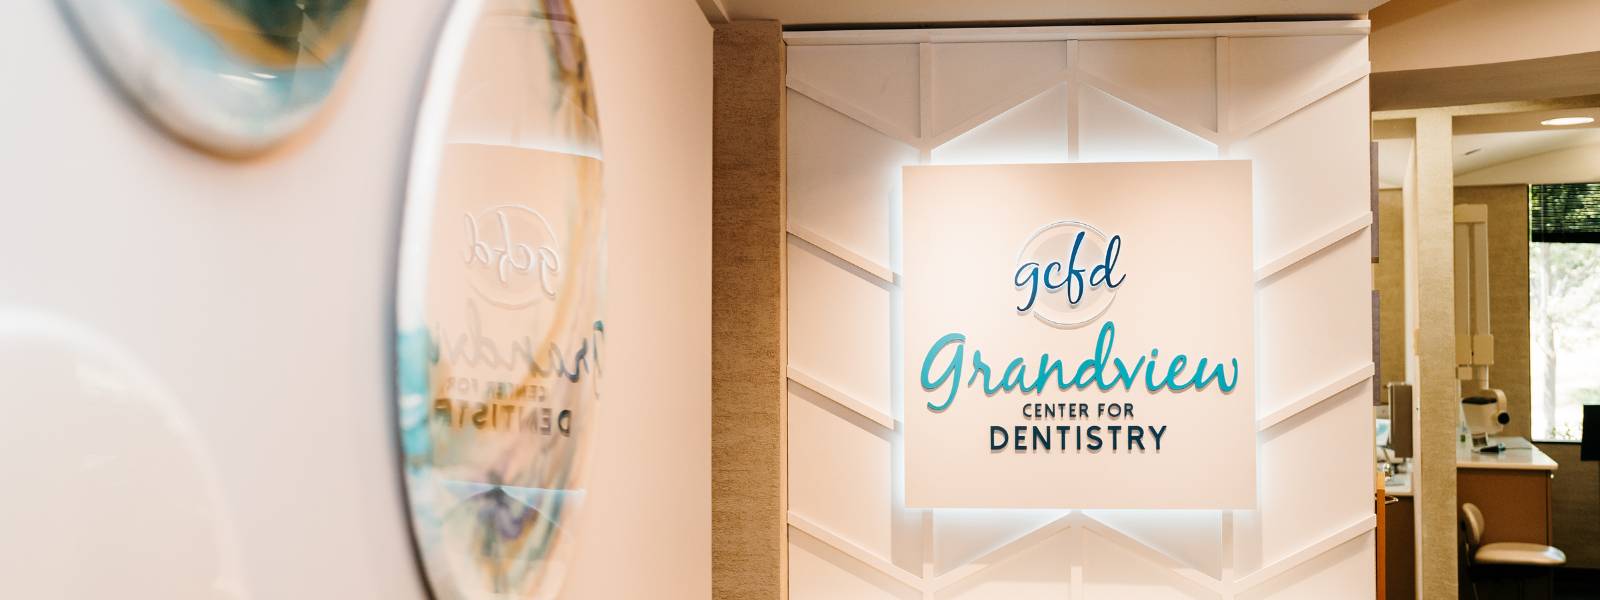 Grand view dentistry